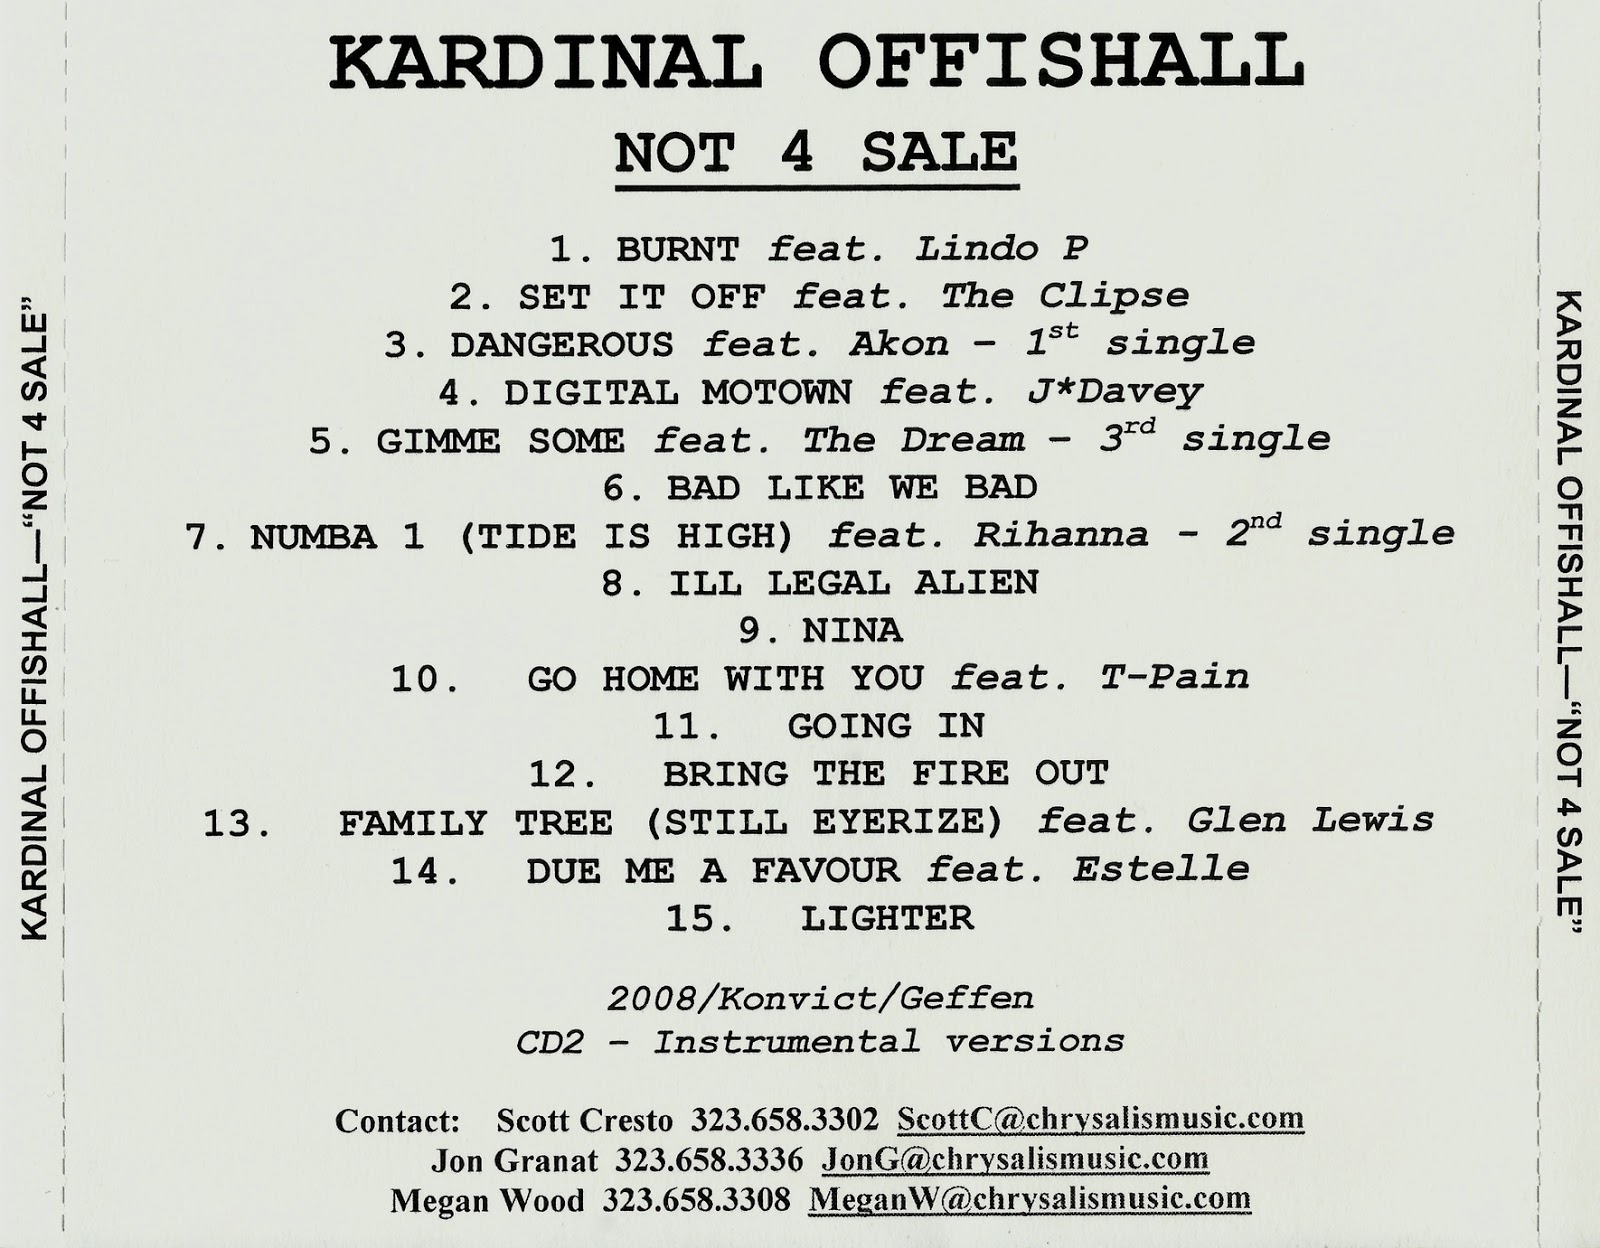 Not 4 Sale - Kardinal Offishall Songs, Reviews, Credits